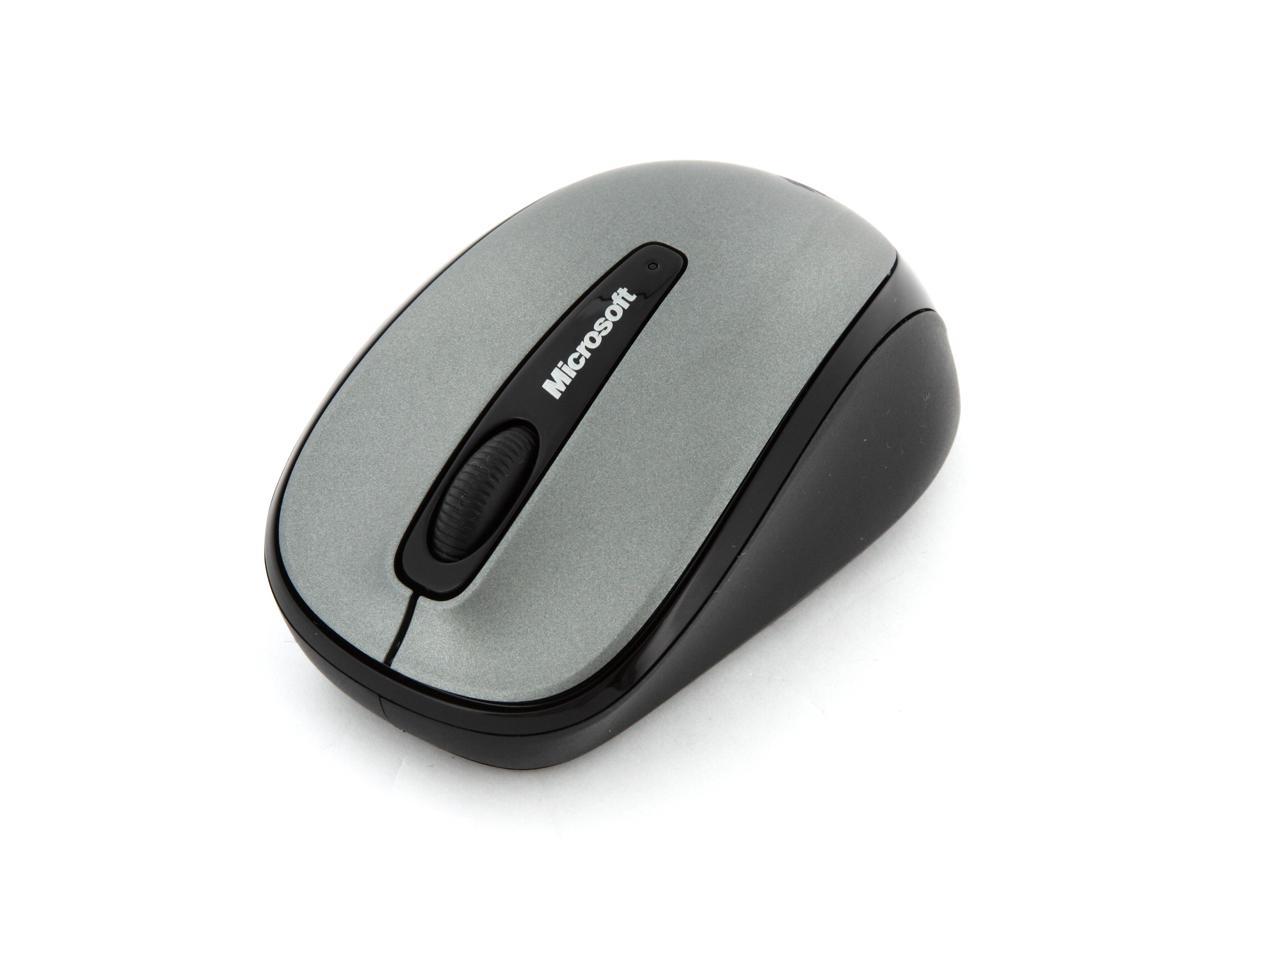 microsoft wireless mouse 3500 battery life